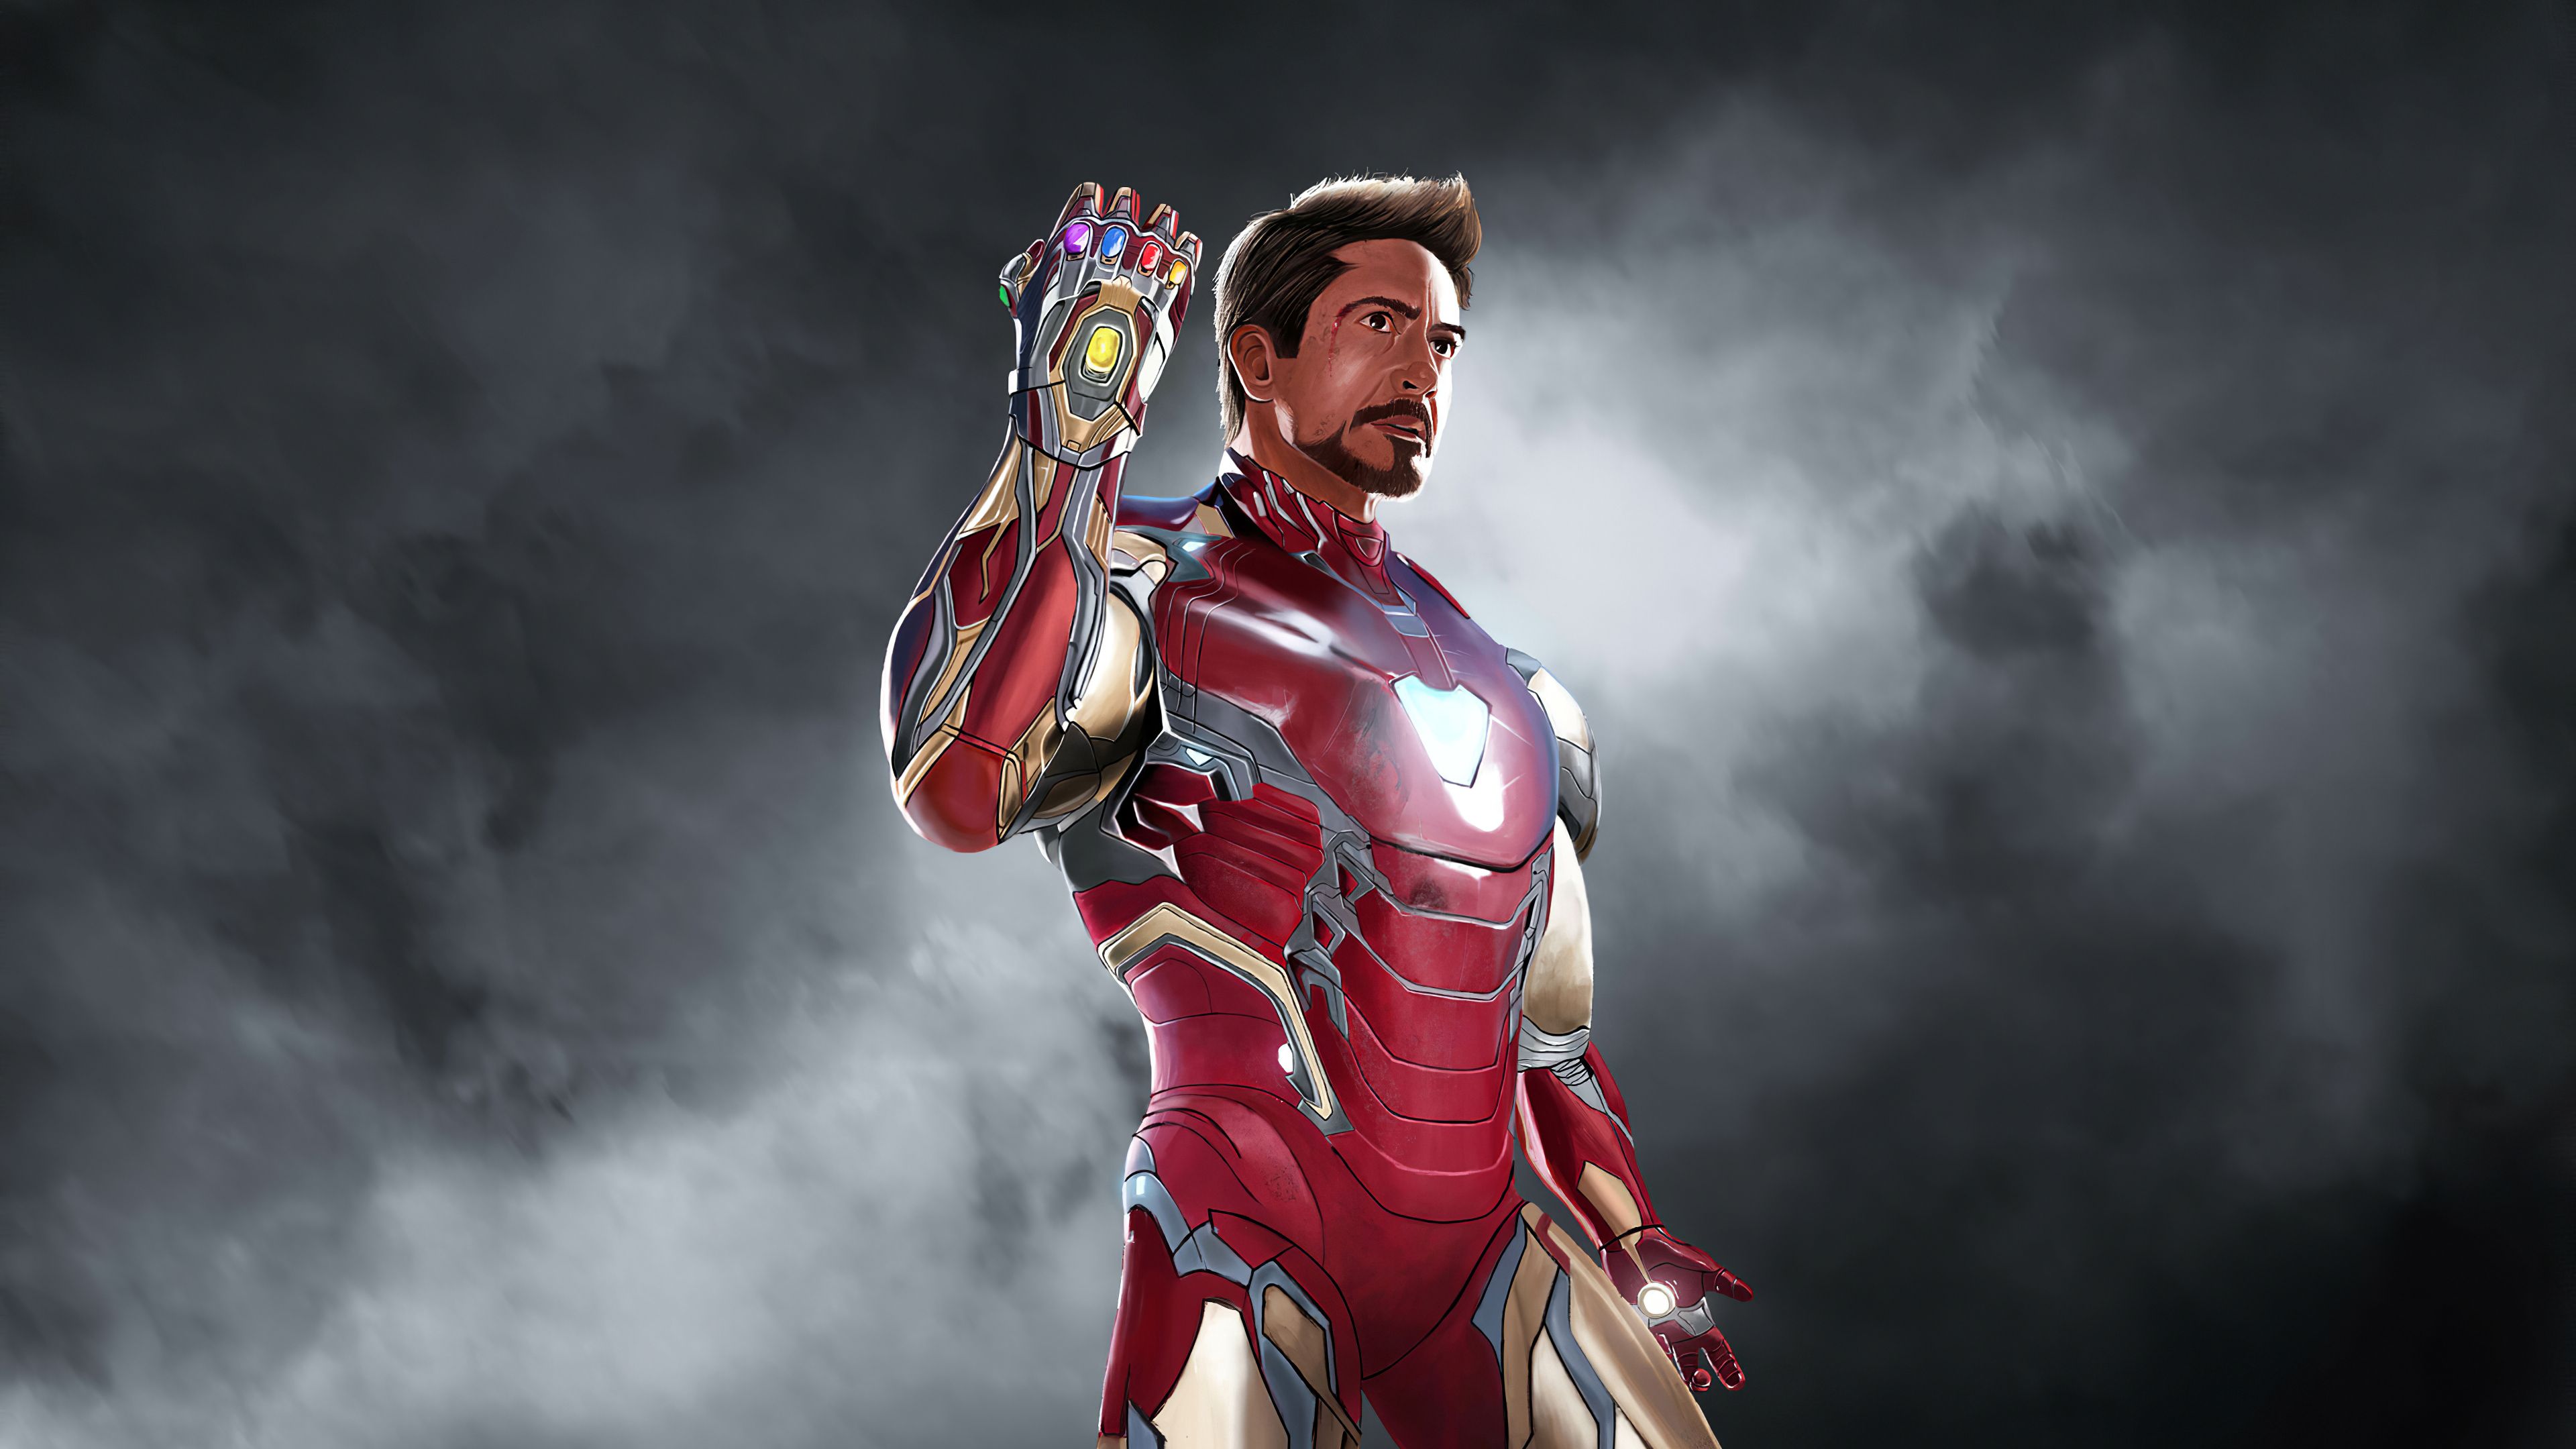 Iron Man 2020 Art, HD Superheroes, 4k Wallpapers, Image